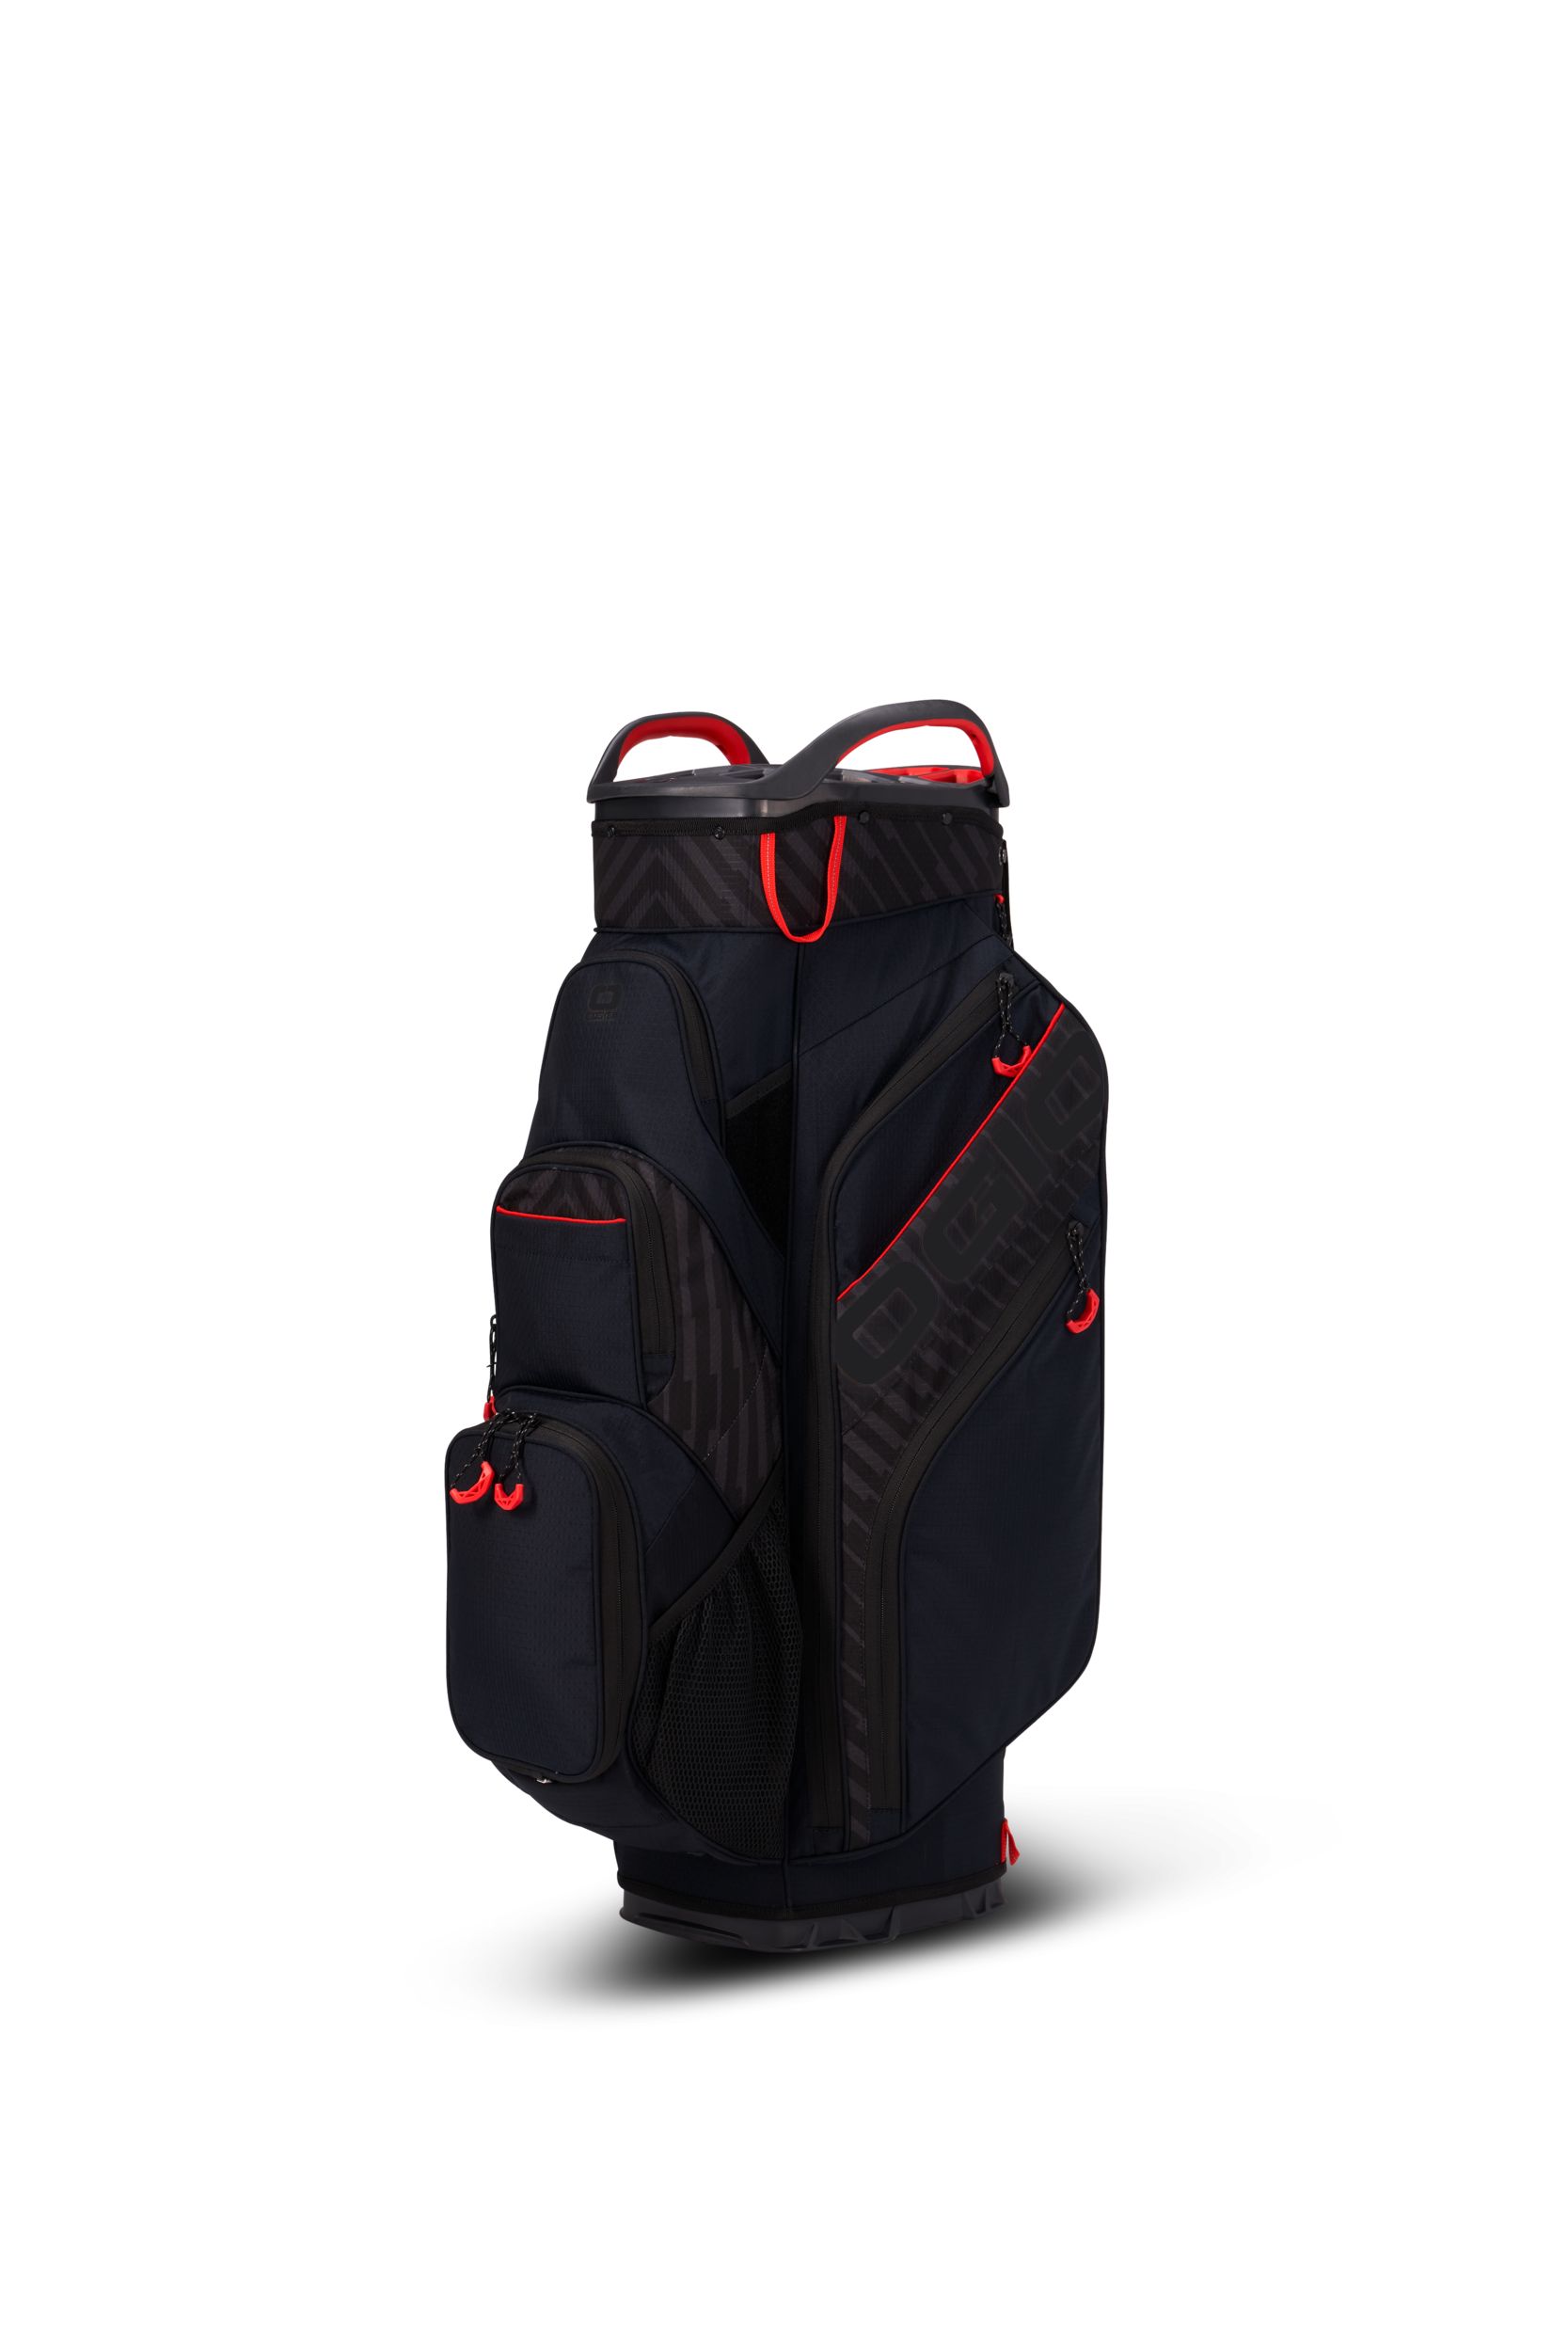 Image of Ogio Woode Cart Golf Bag